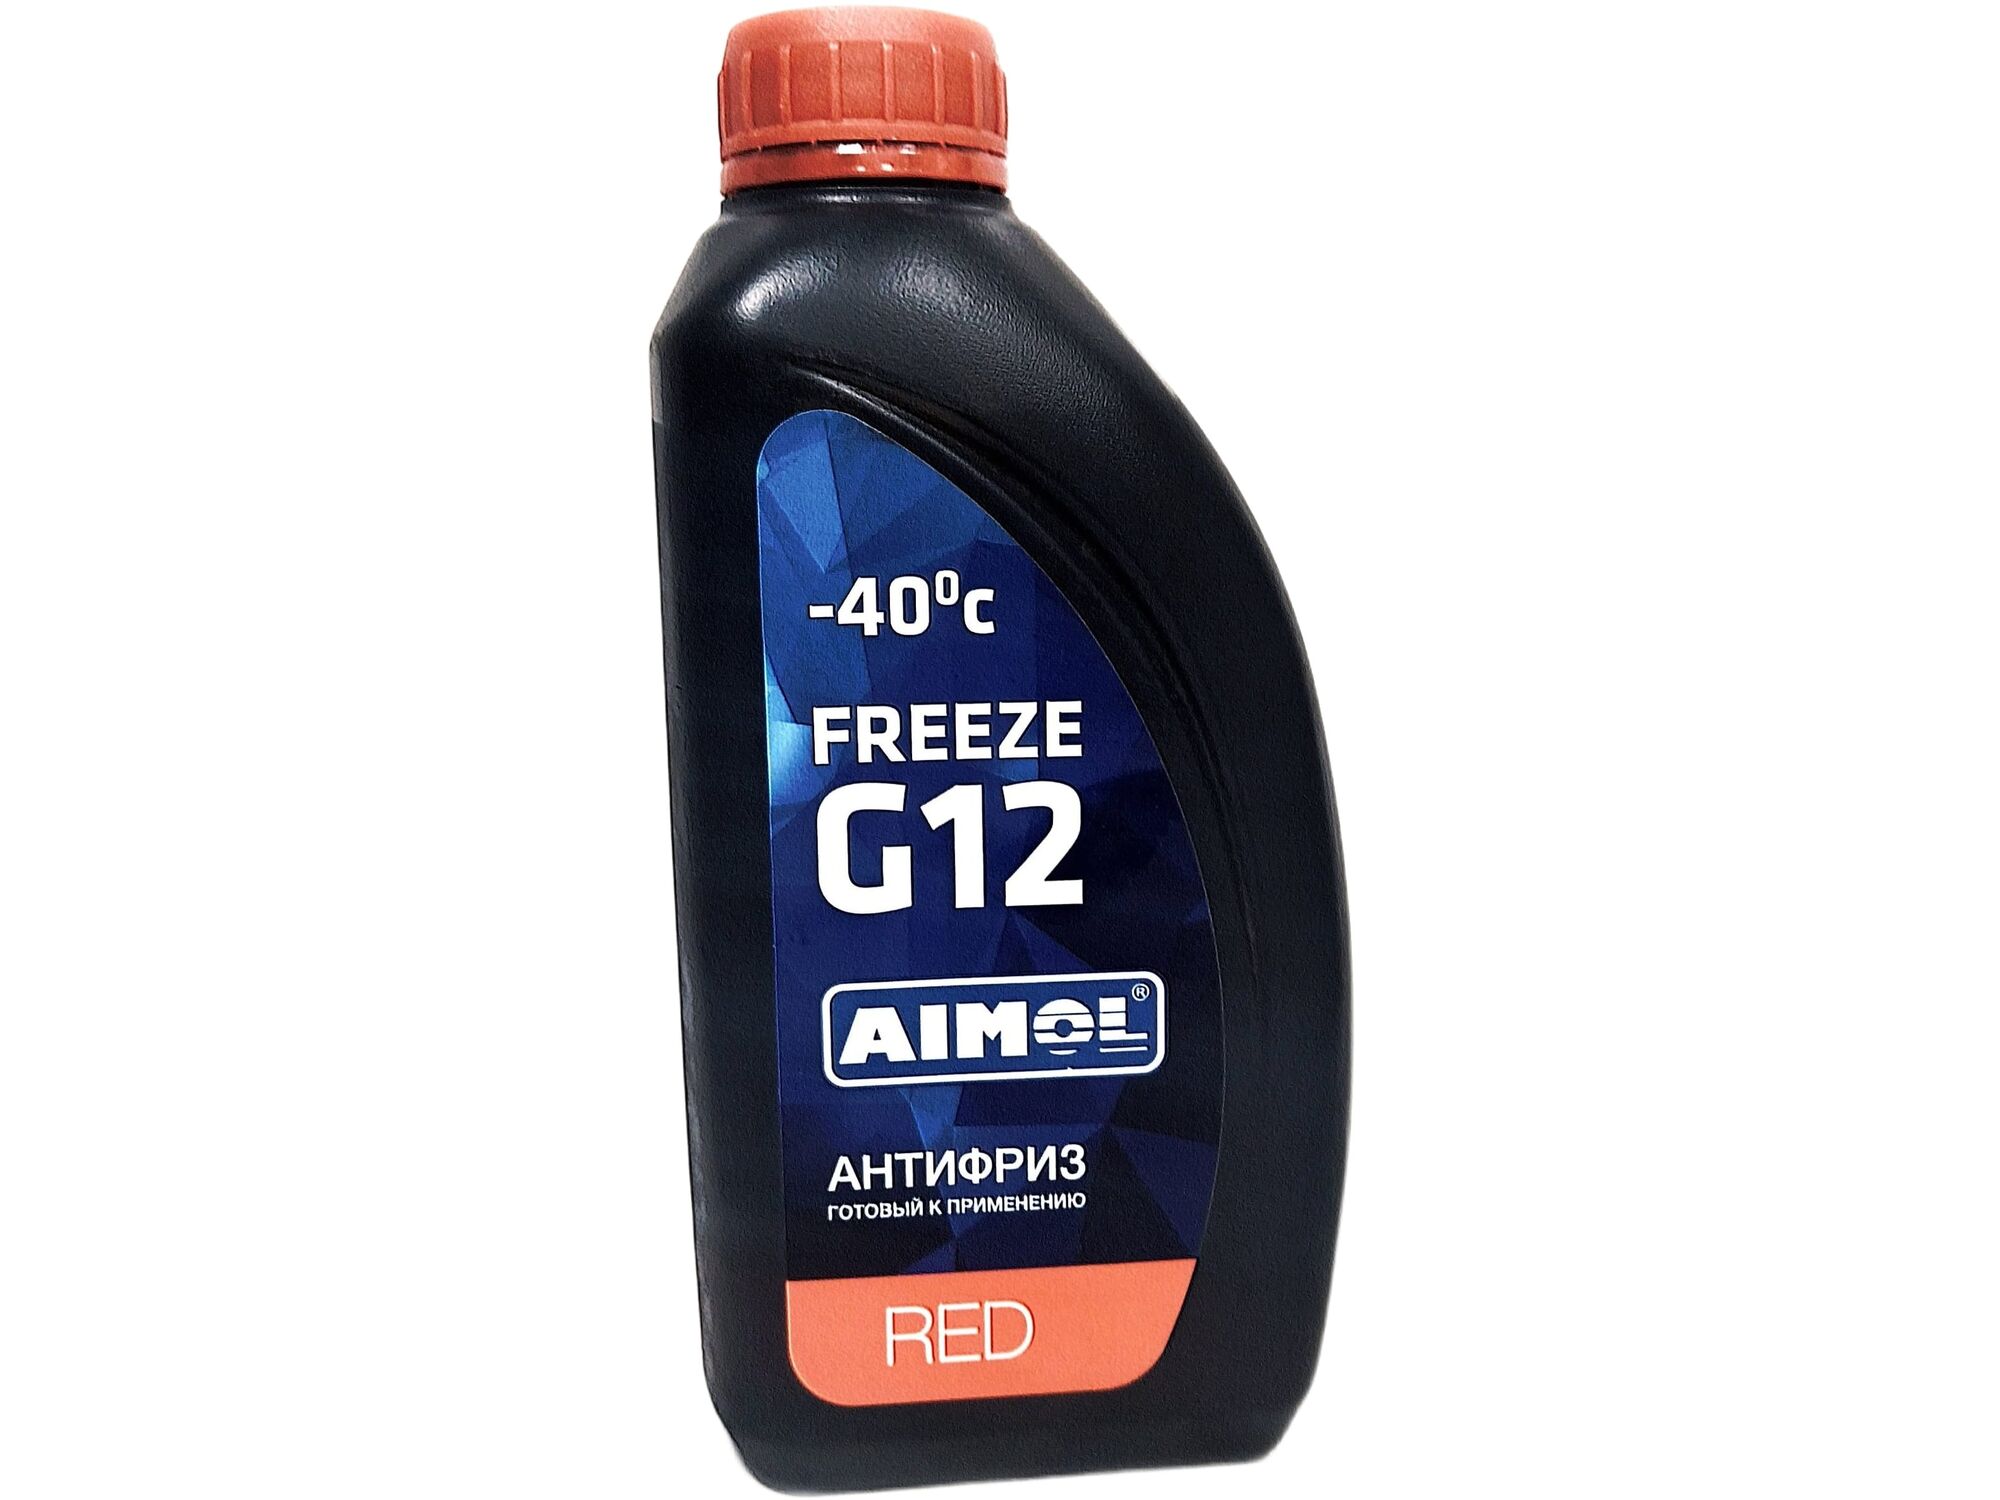 Антифриз Aimol Freeze G12 Red, 1кг